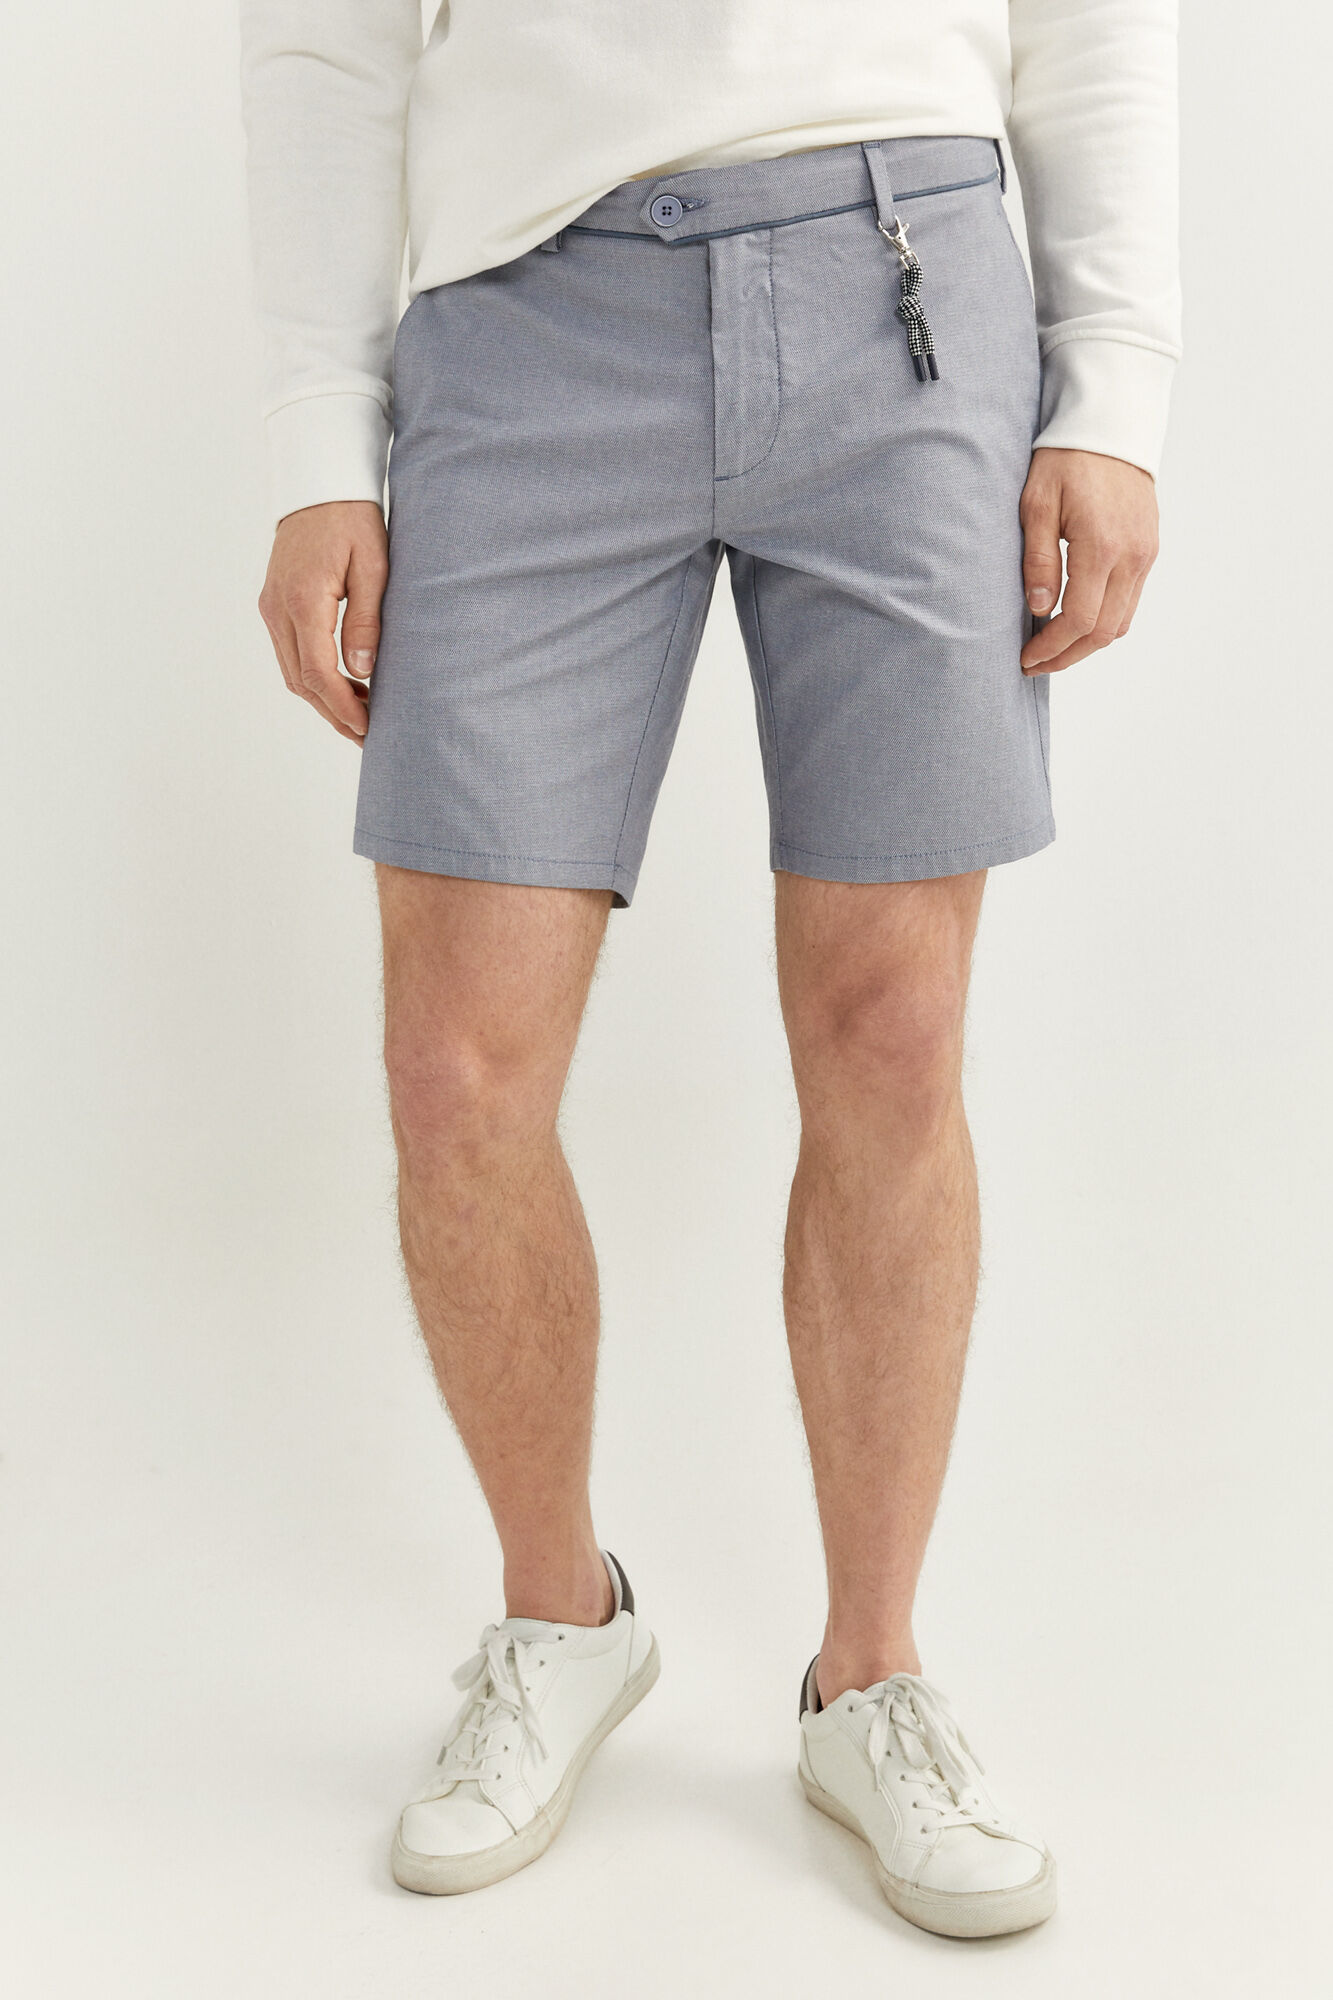 Bermuda shorts for men | Springfield